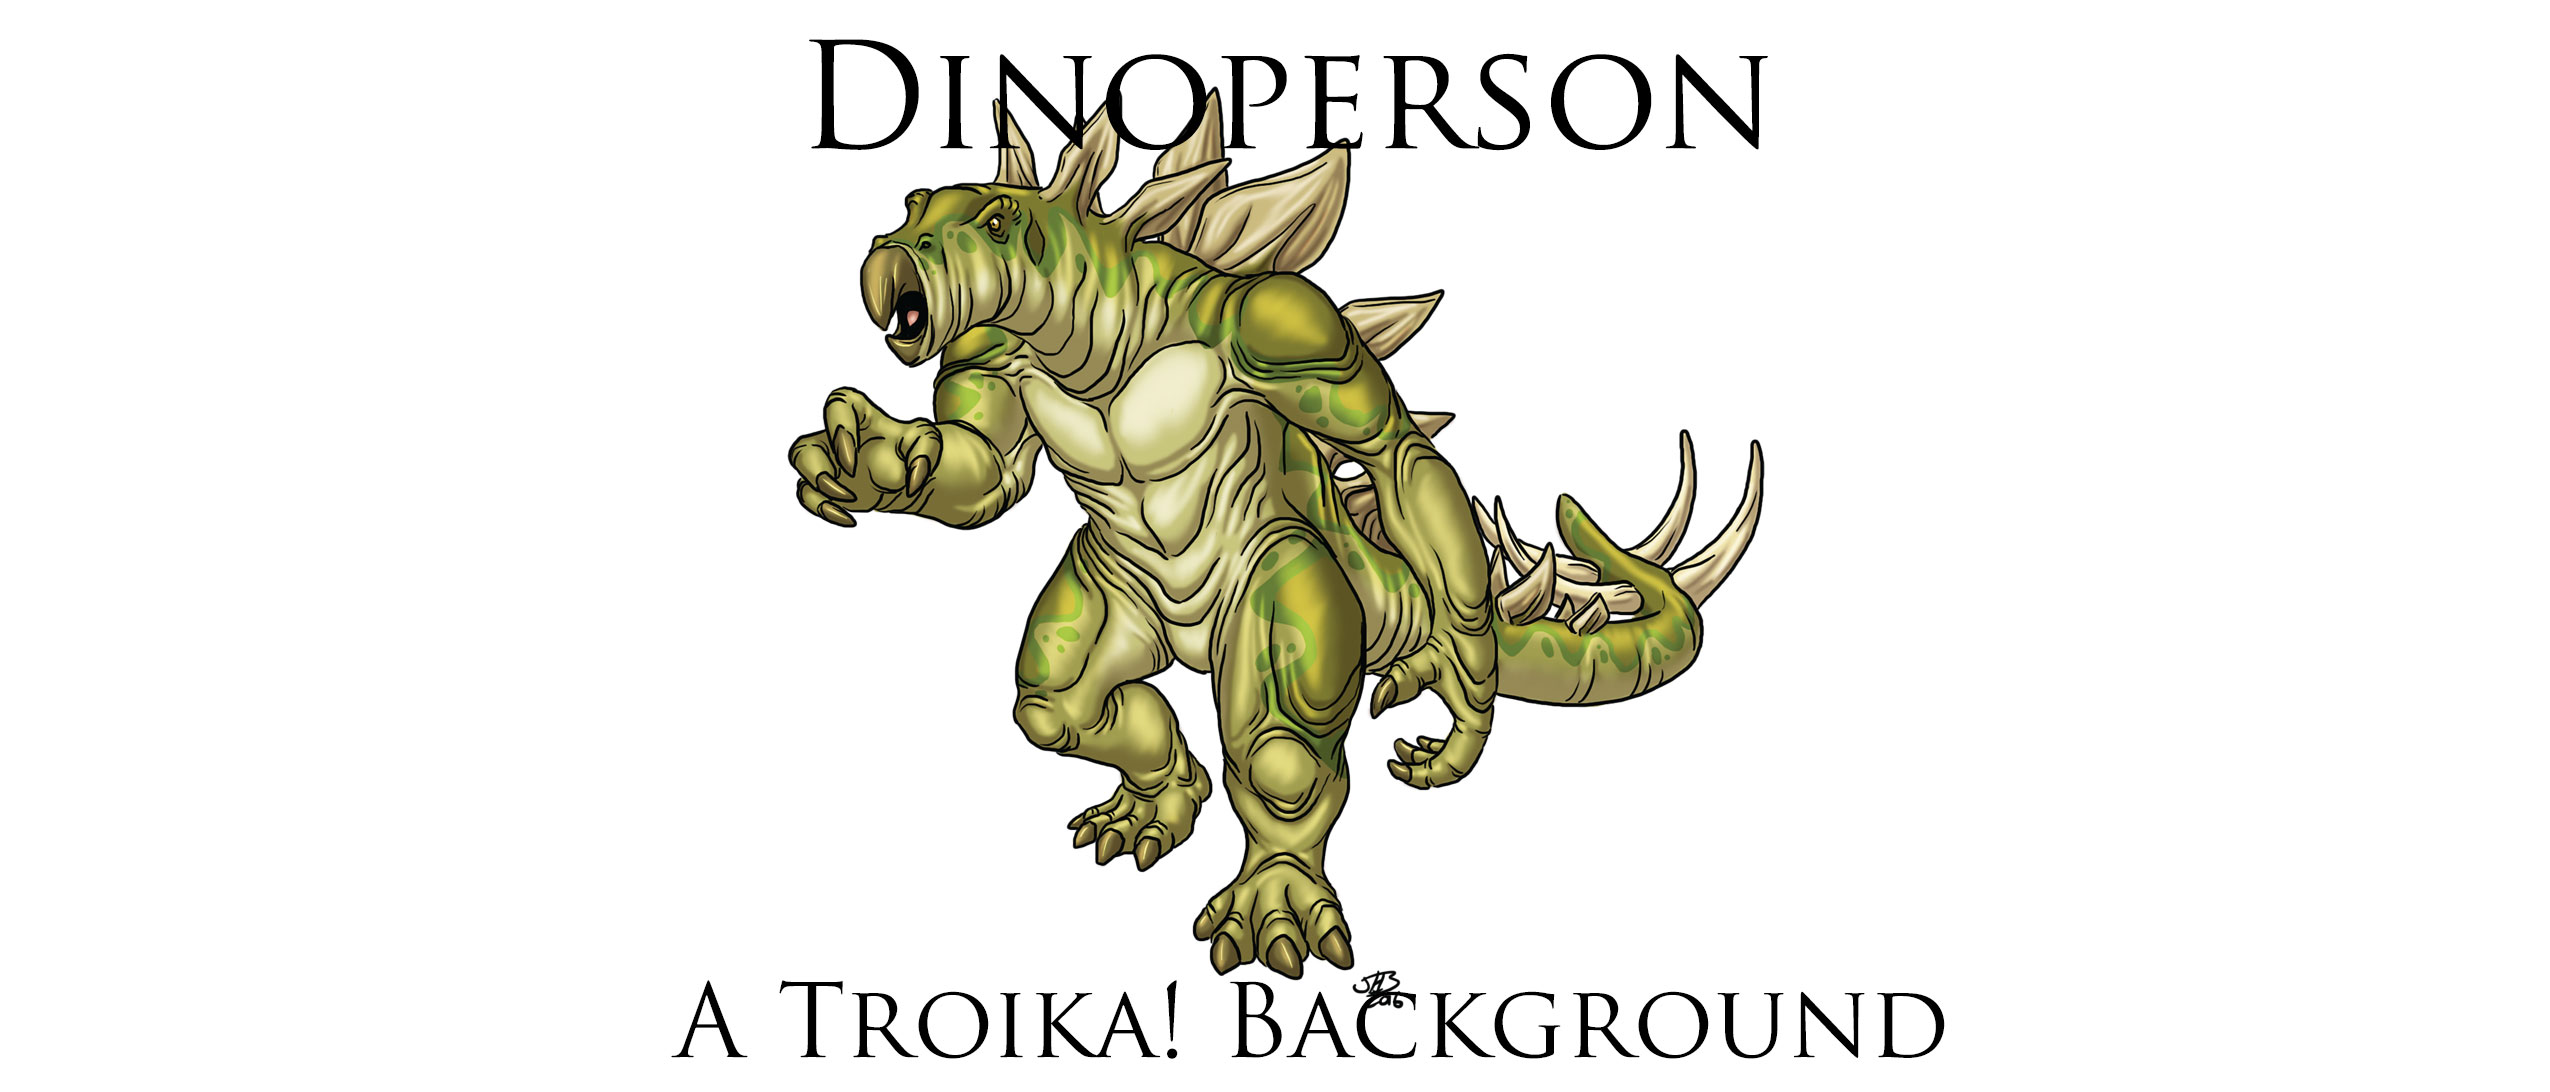 Dinoperson - A Troika! Background